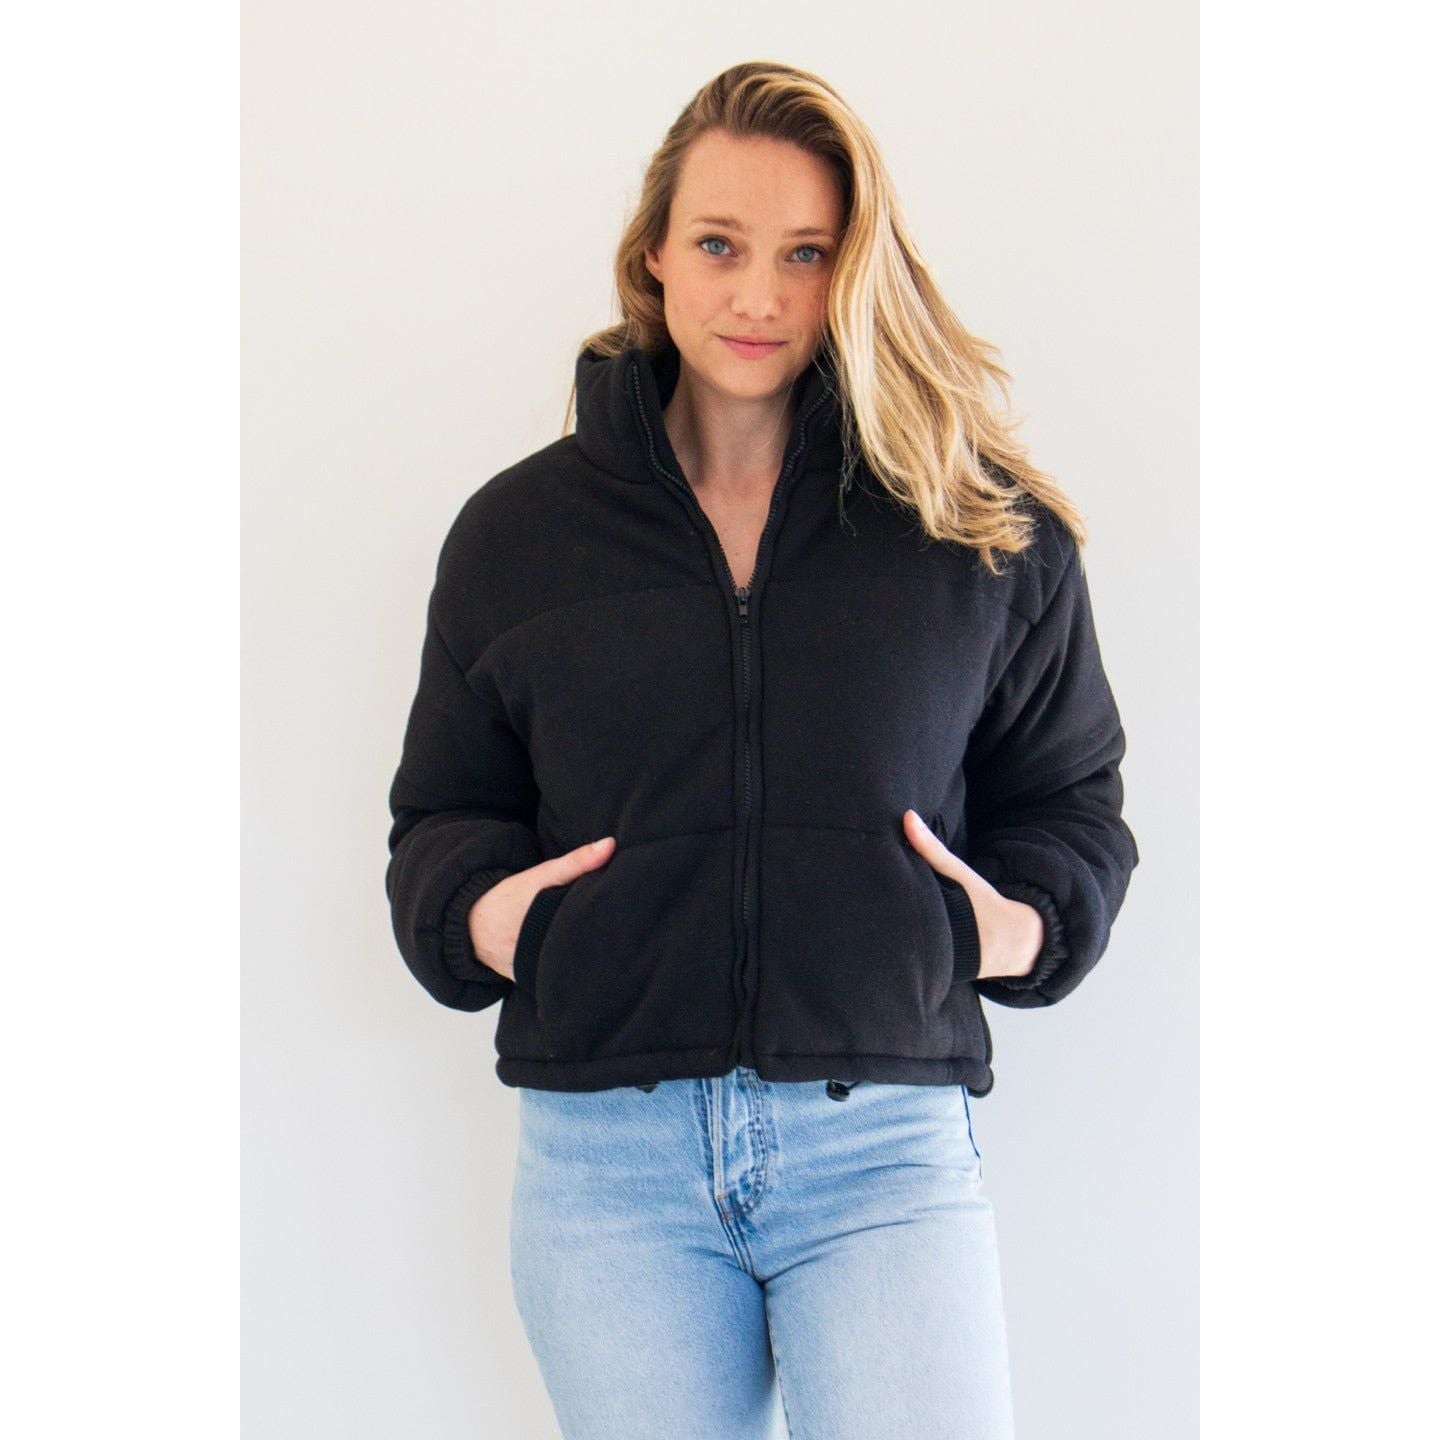 Trimark 99101 Women's Colton Fleece Lined Jacket